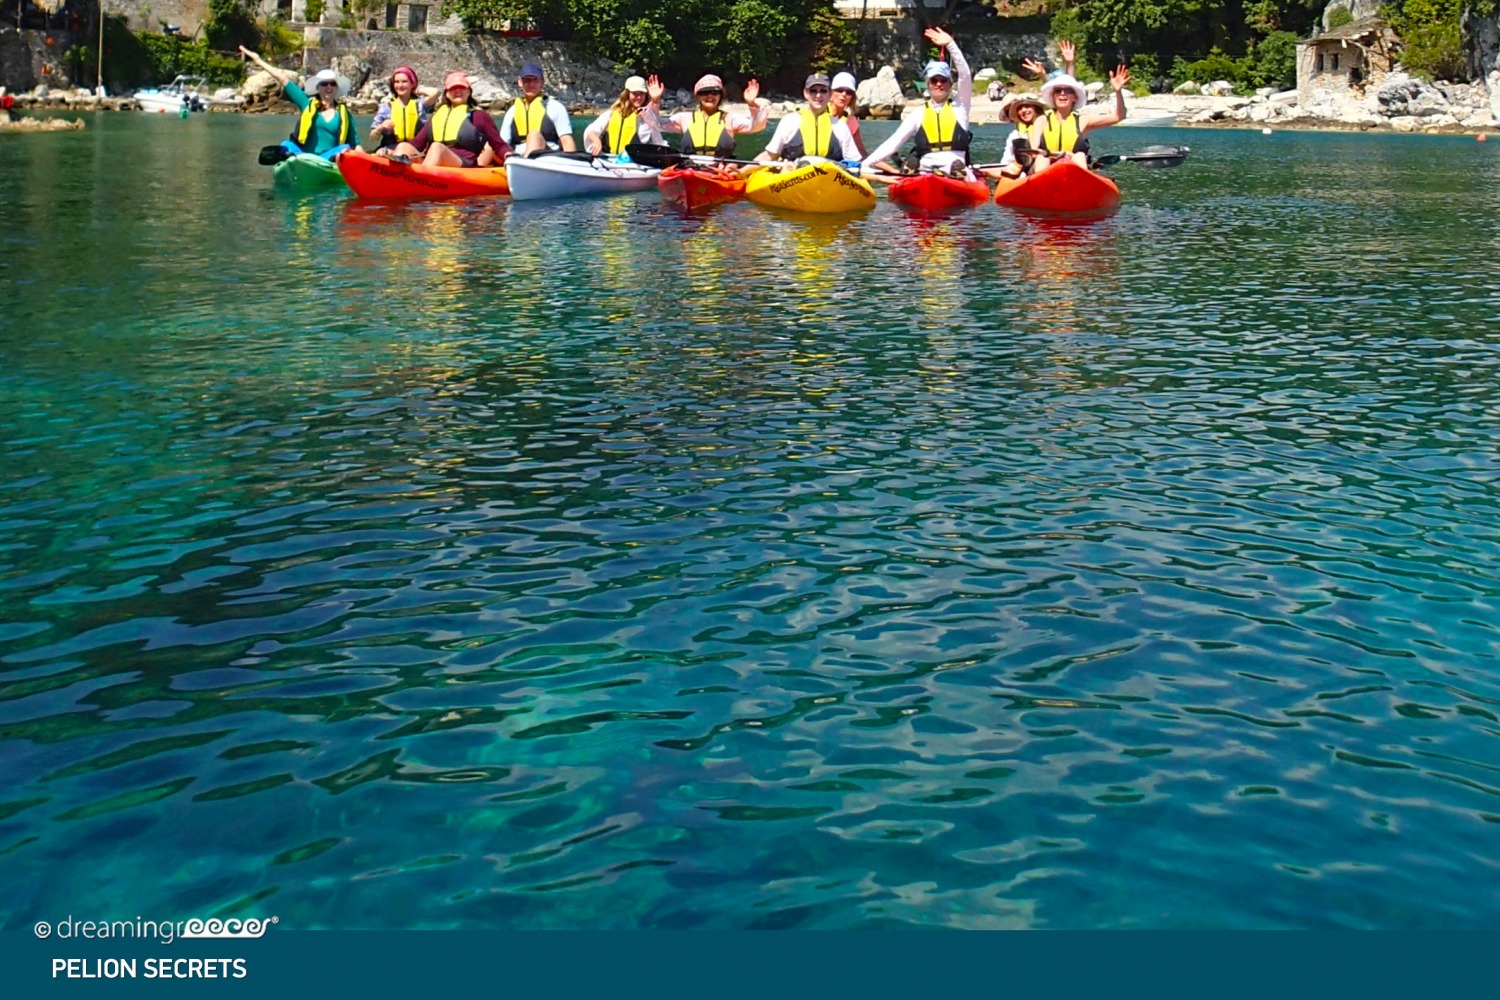 Sea Kayaking Pelion Secrets in Pelio. Kayak in Greece.